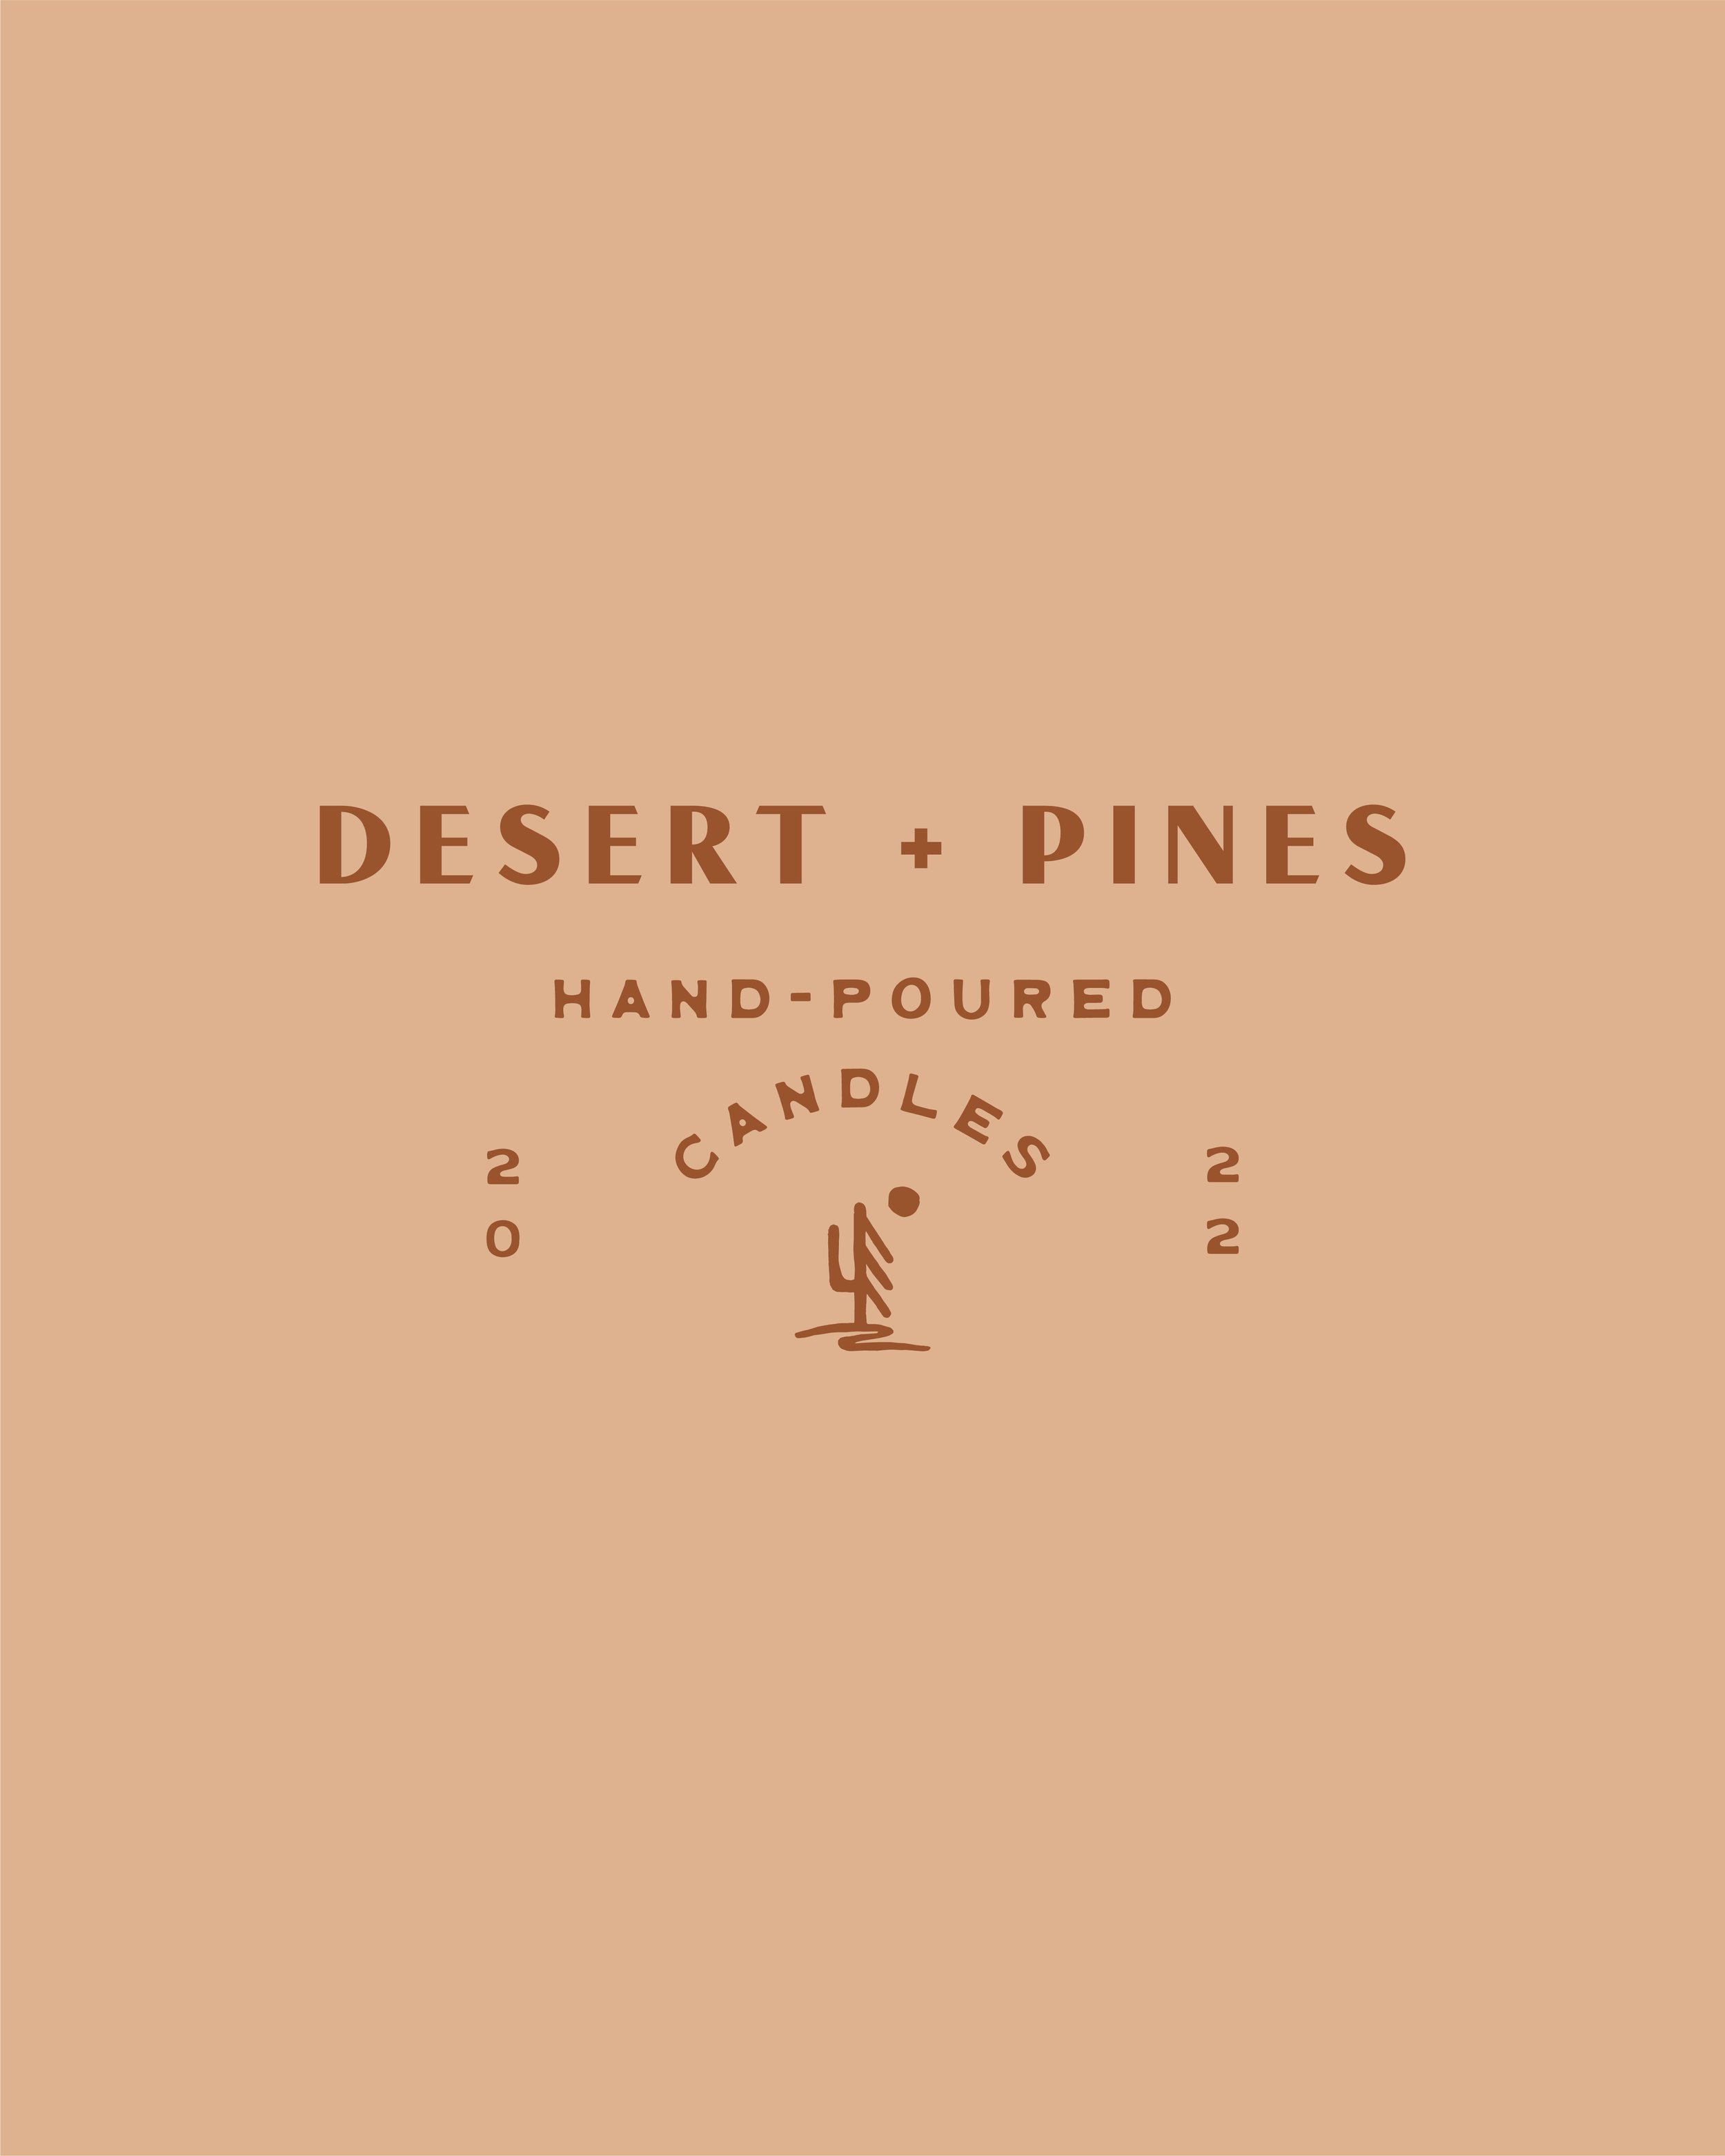 desert-and-pines-candle-branding-04.jpg